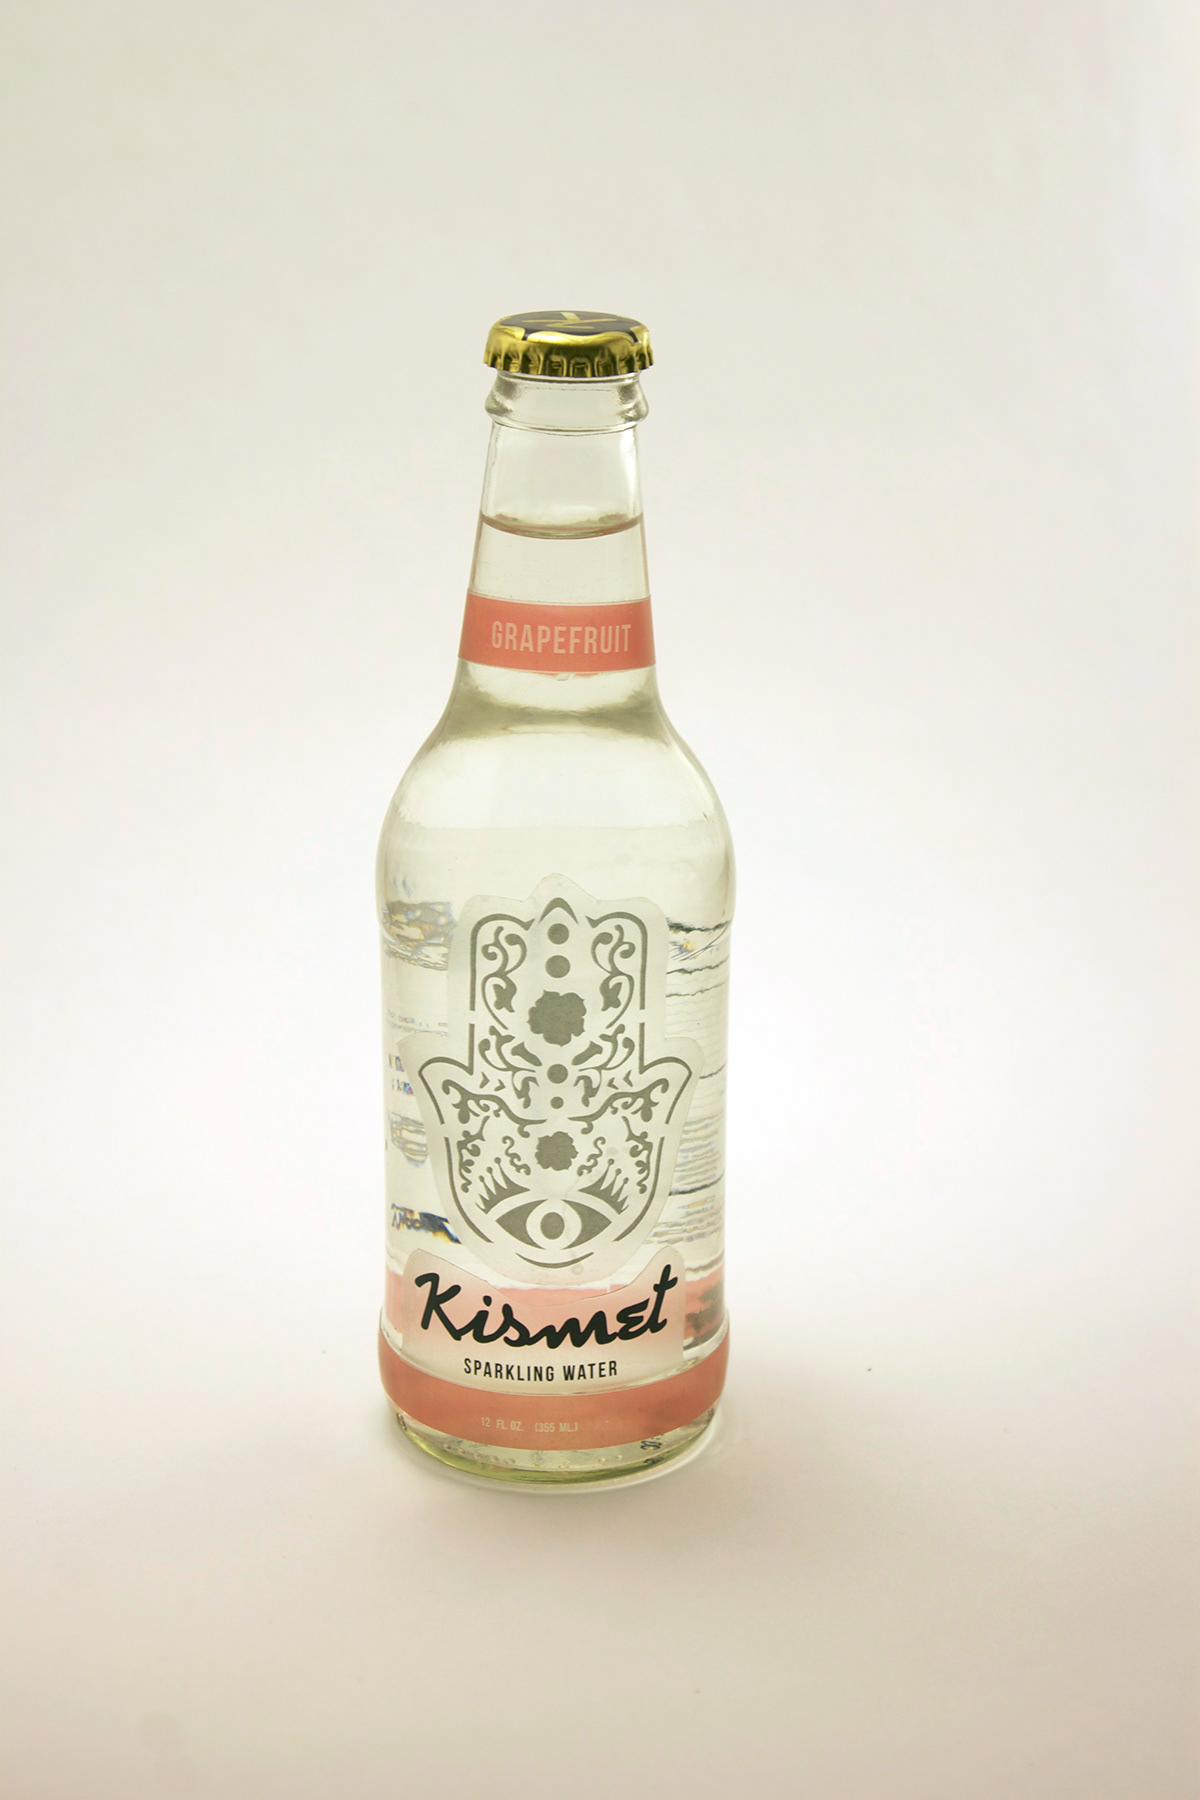 soda design middle east Morocco soda packaging soda pop